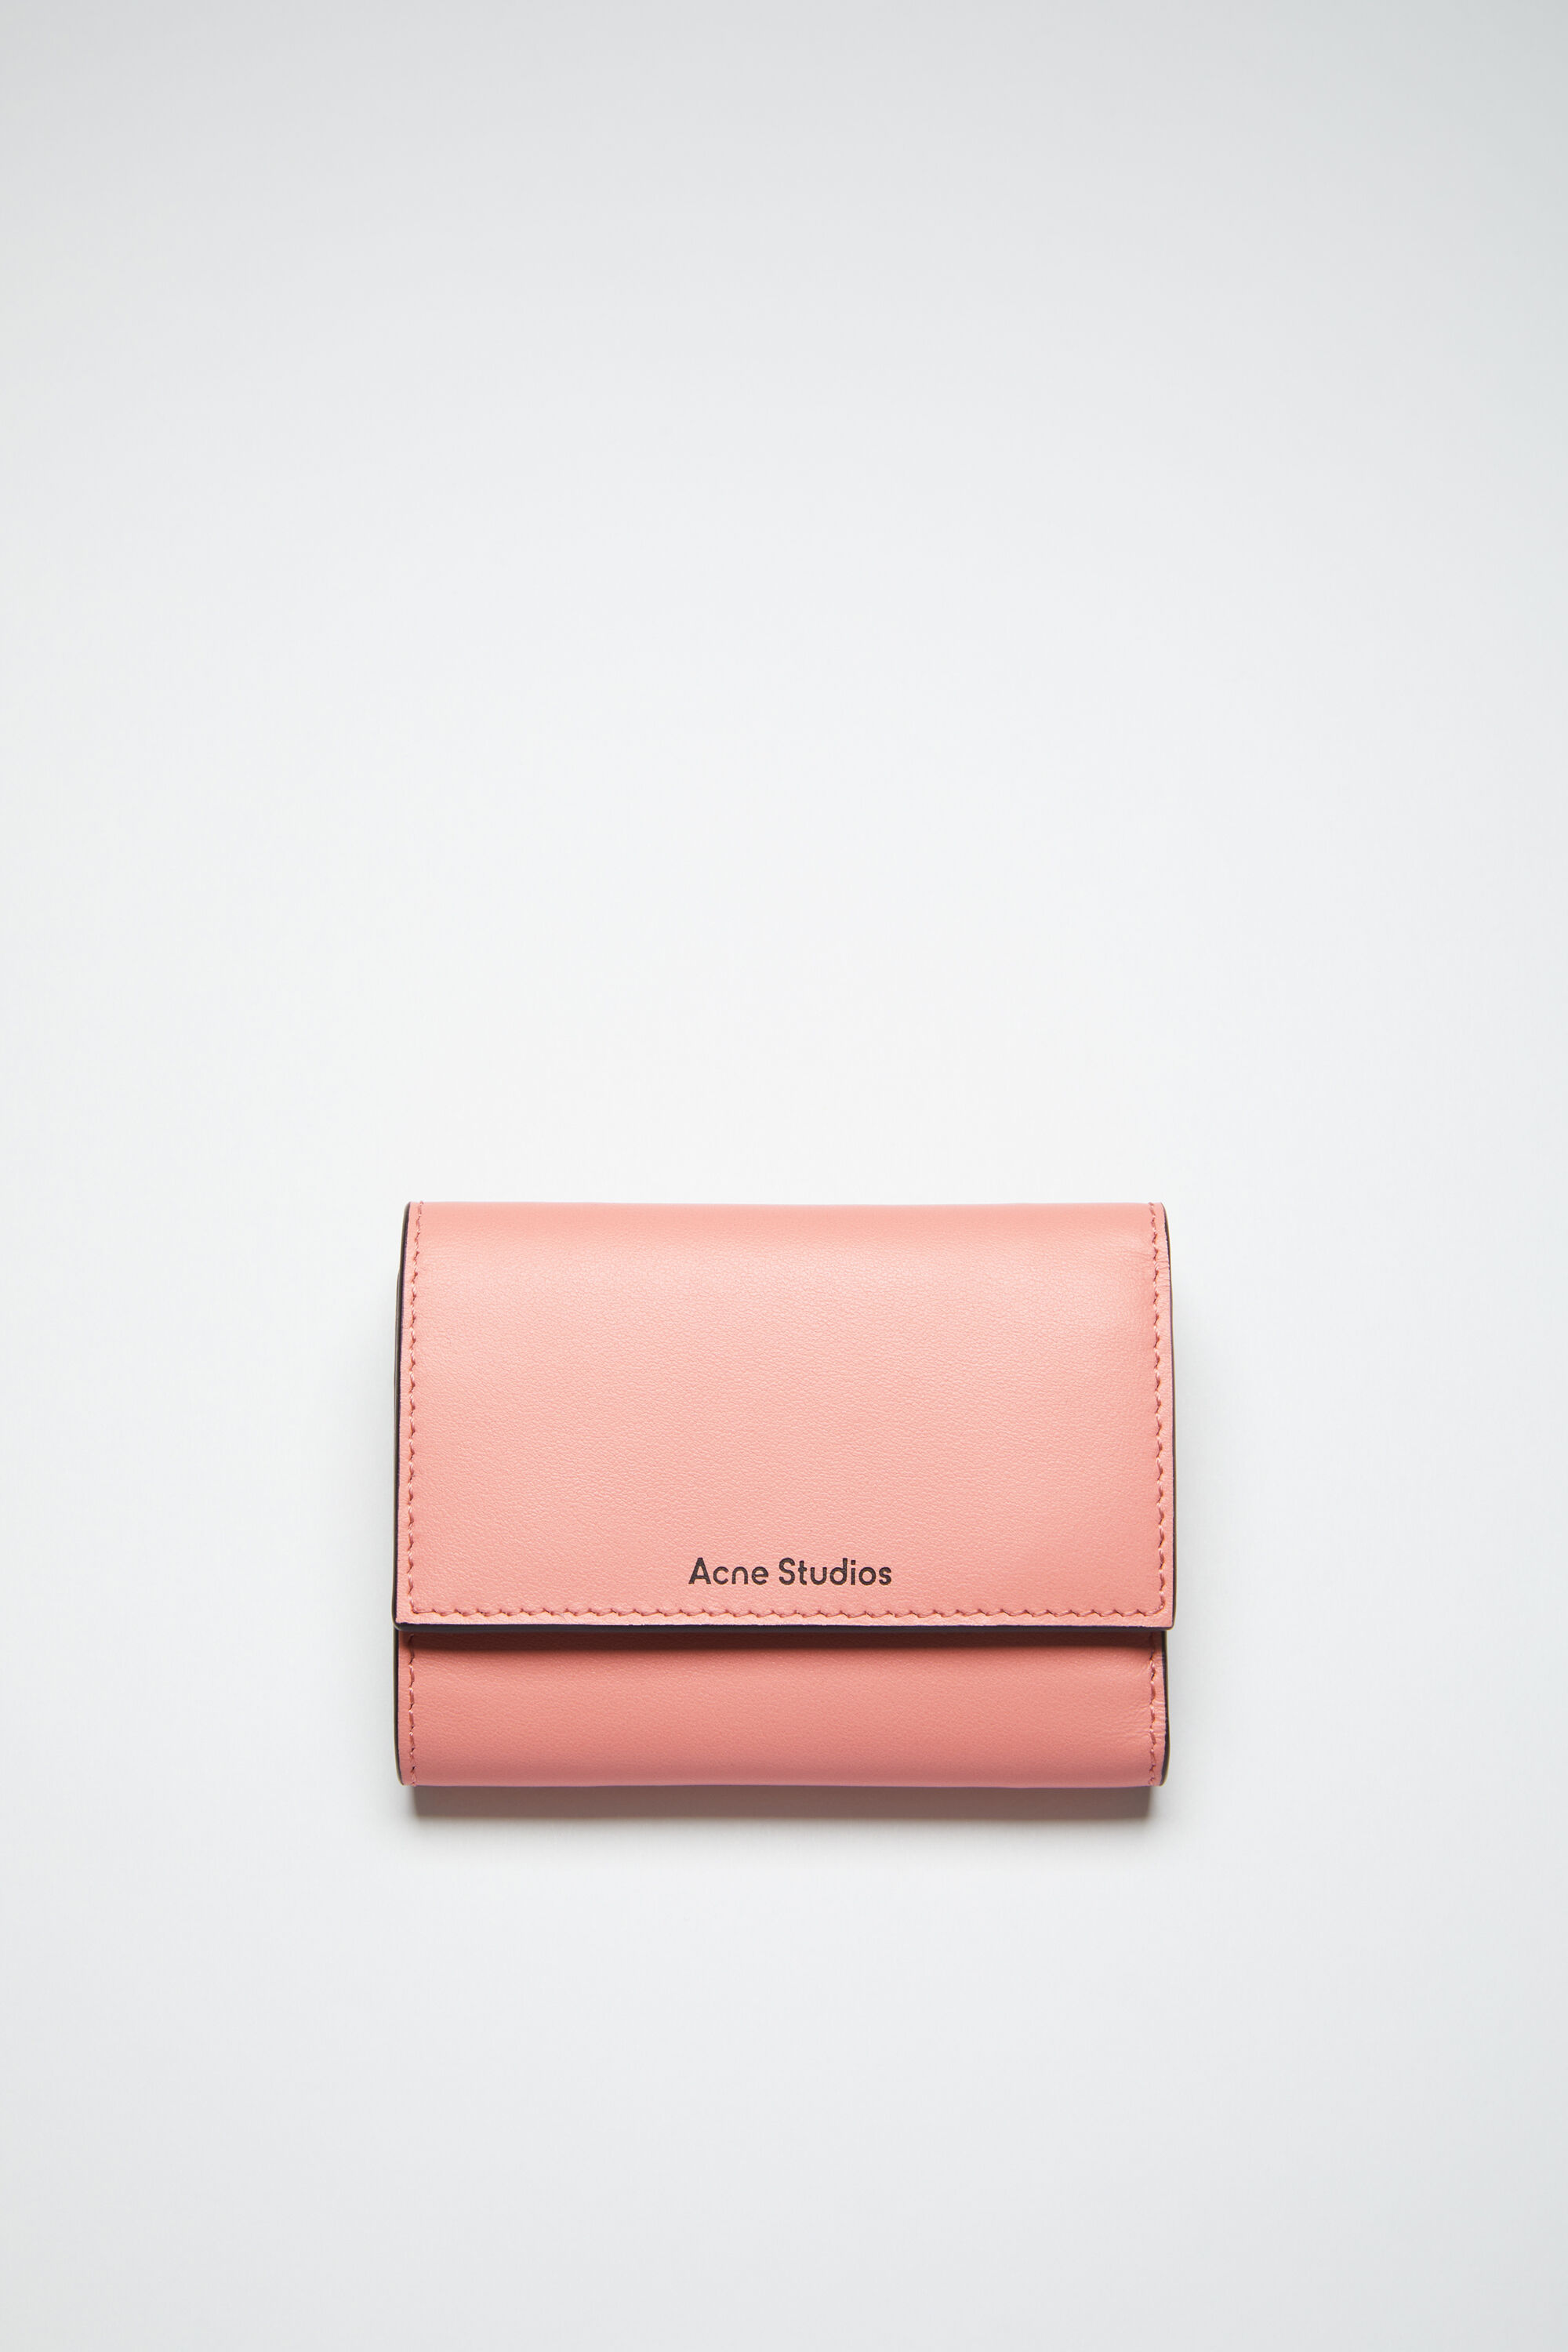 Acne Studios - Folded wallet - Salmon pink